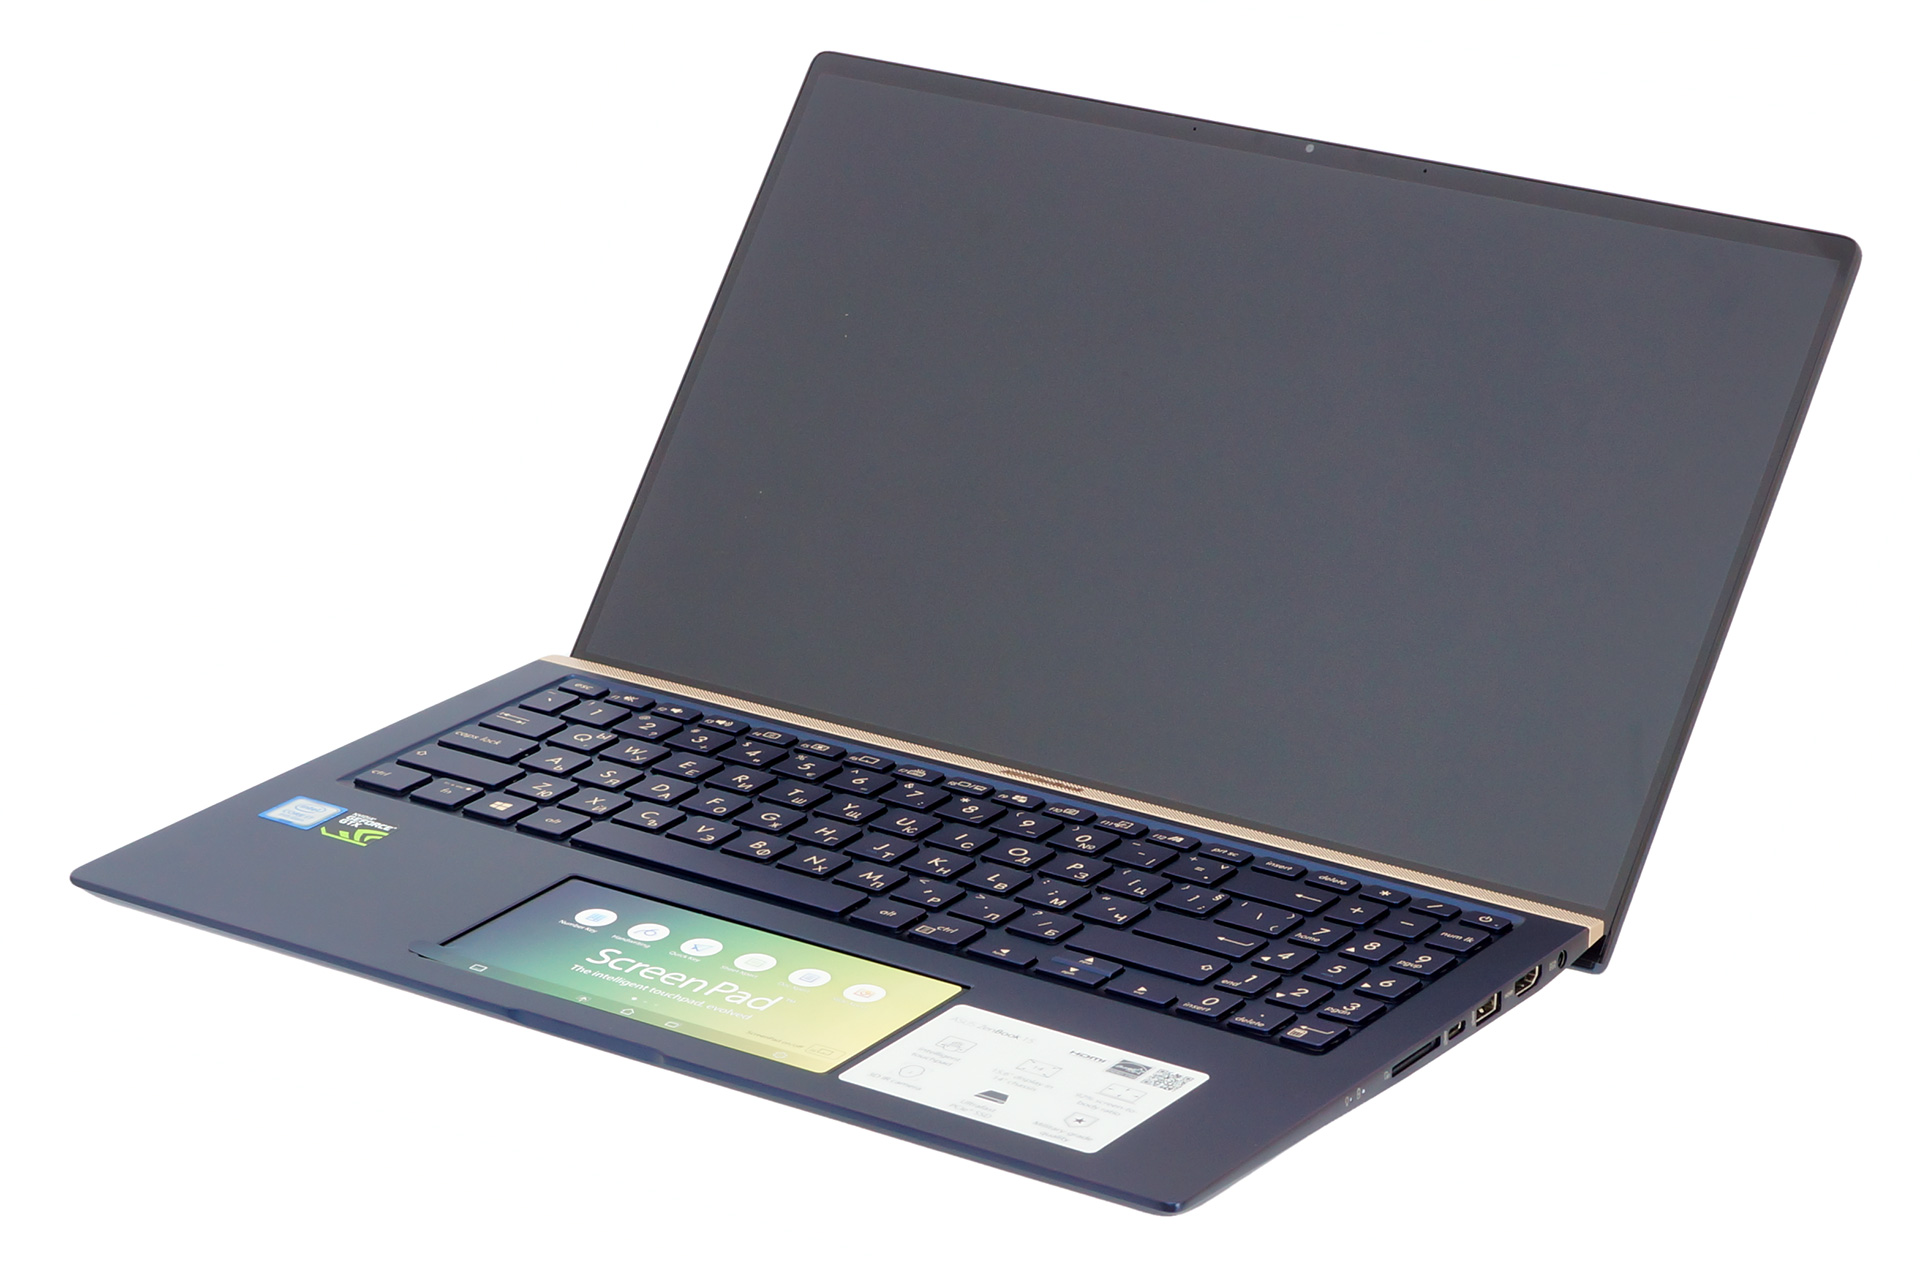 ASUS Zenbook 15 UX534｜Laptops For Home｜ASUS Switzerland